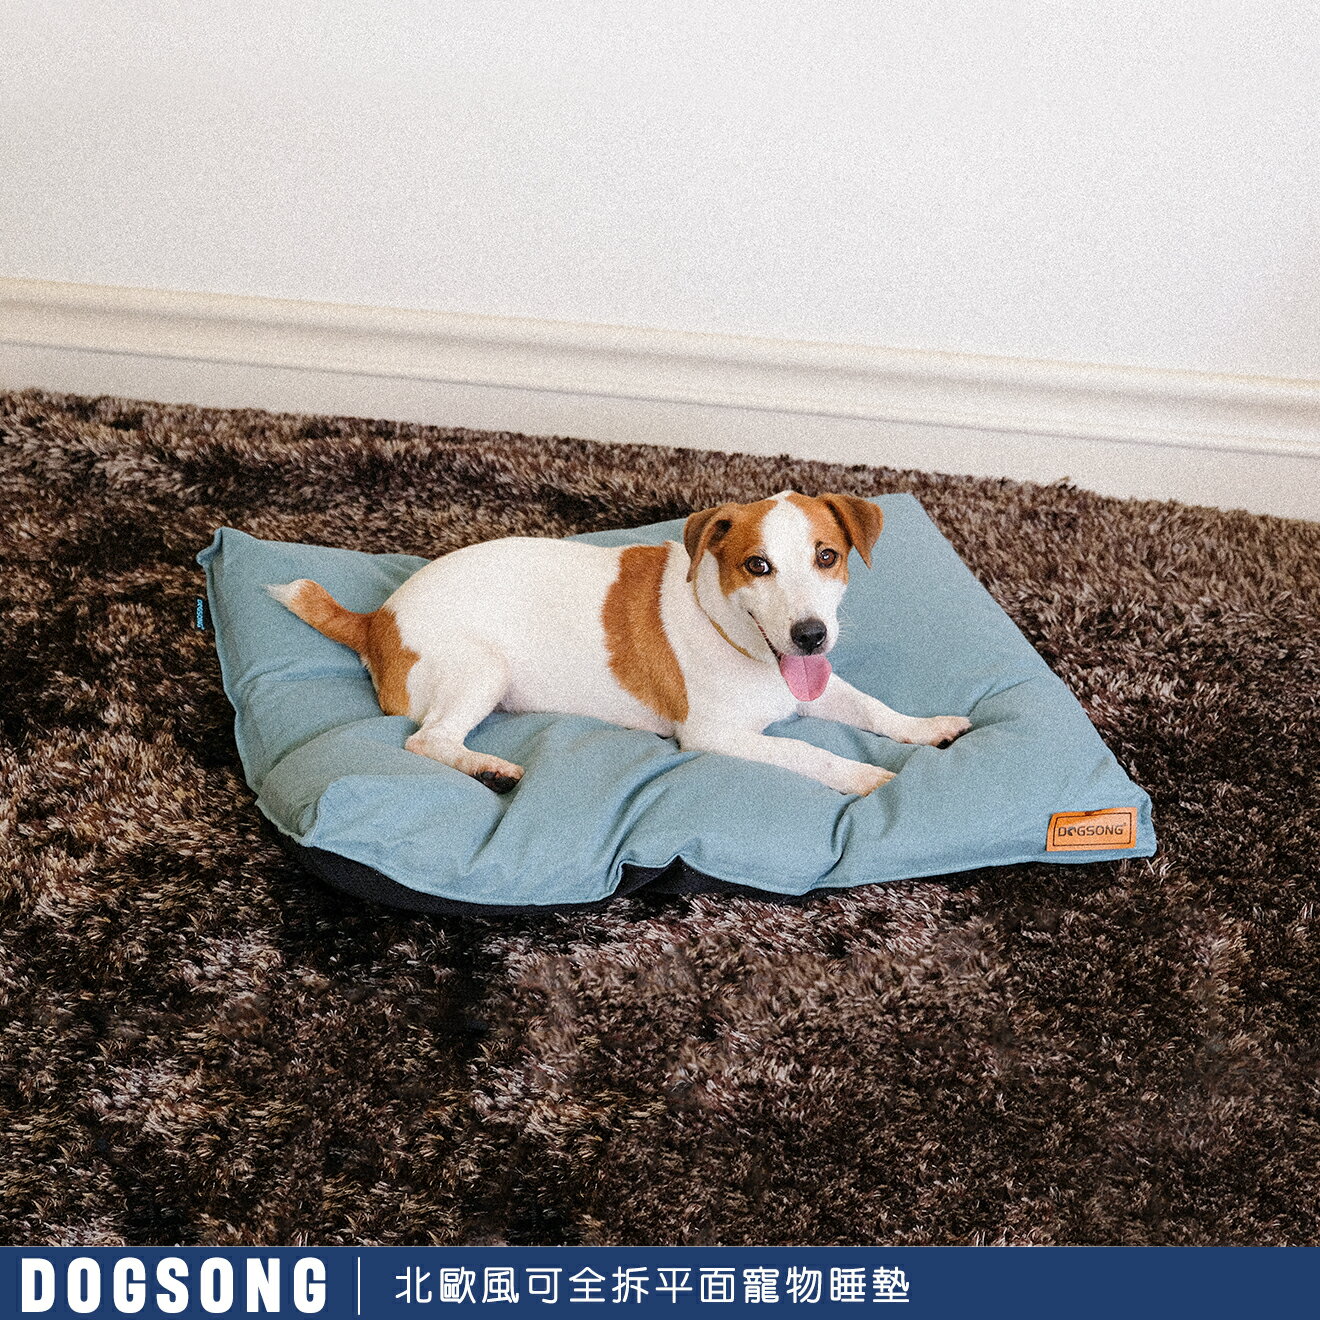 DOGSONG 北歐風格寵物睡窩墊 可全拆洗 寵物床/睡墊/睡床/狗睡墊/貓睡墊/狗床/貓床/狗窩/貓窩/床窩/寵物睡窩